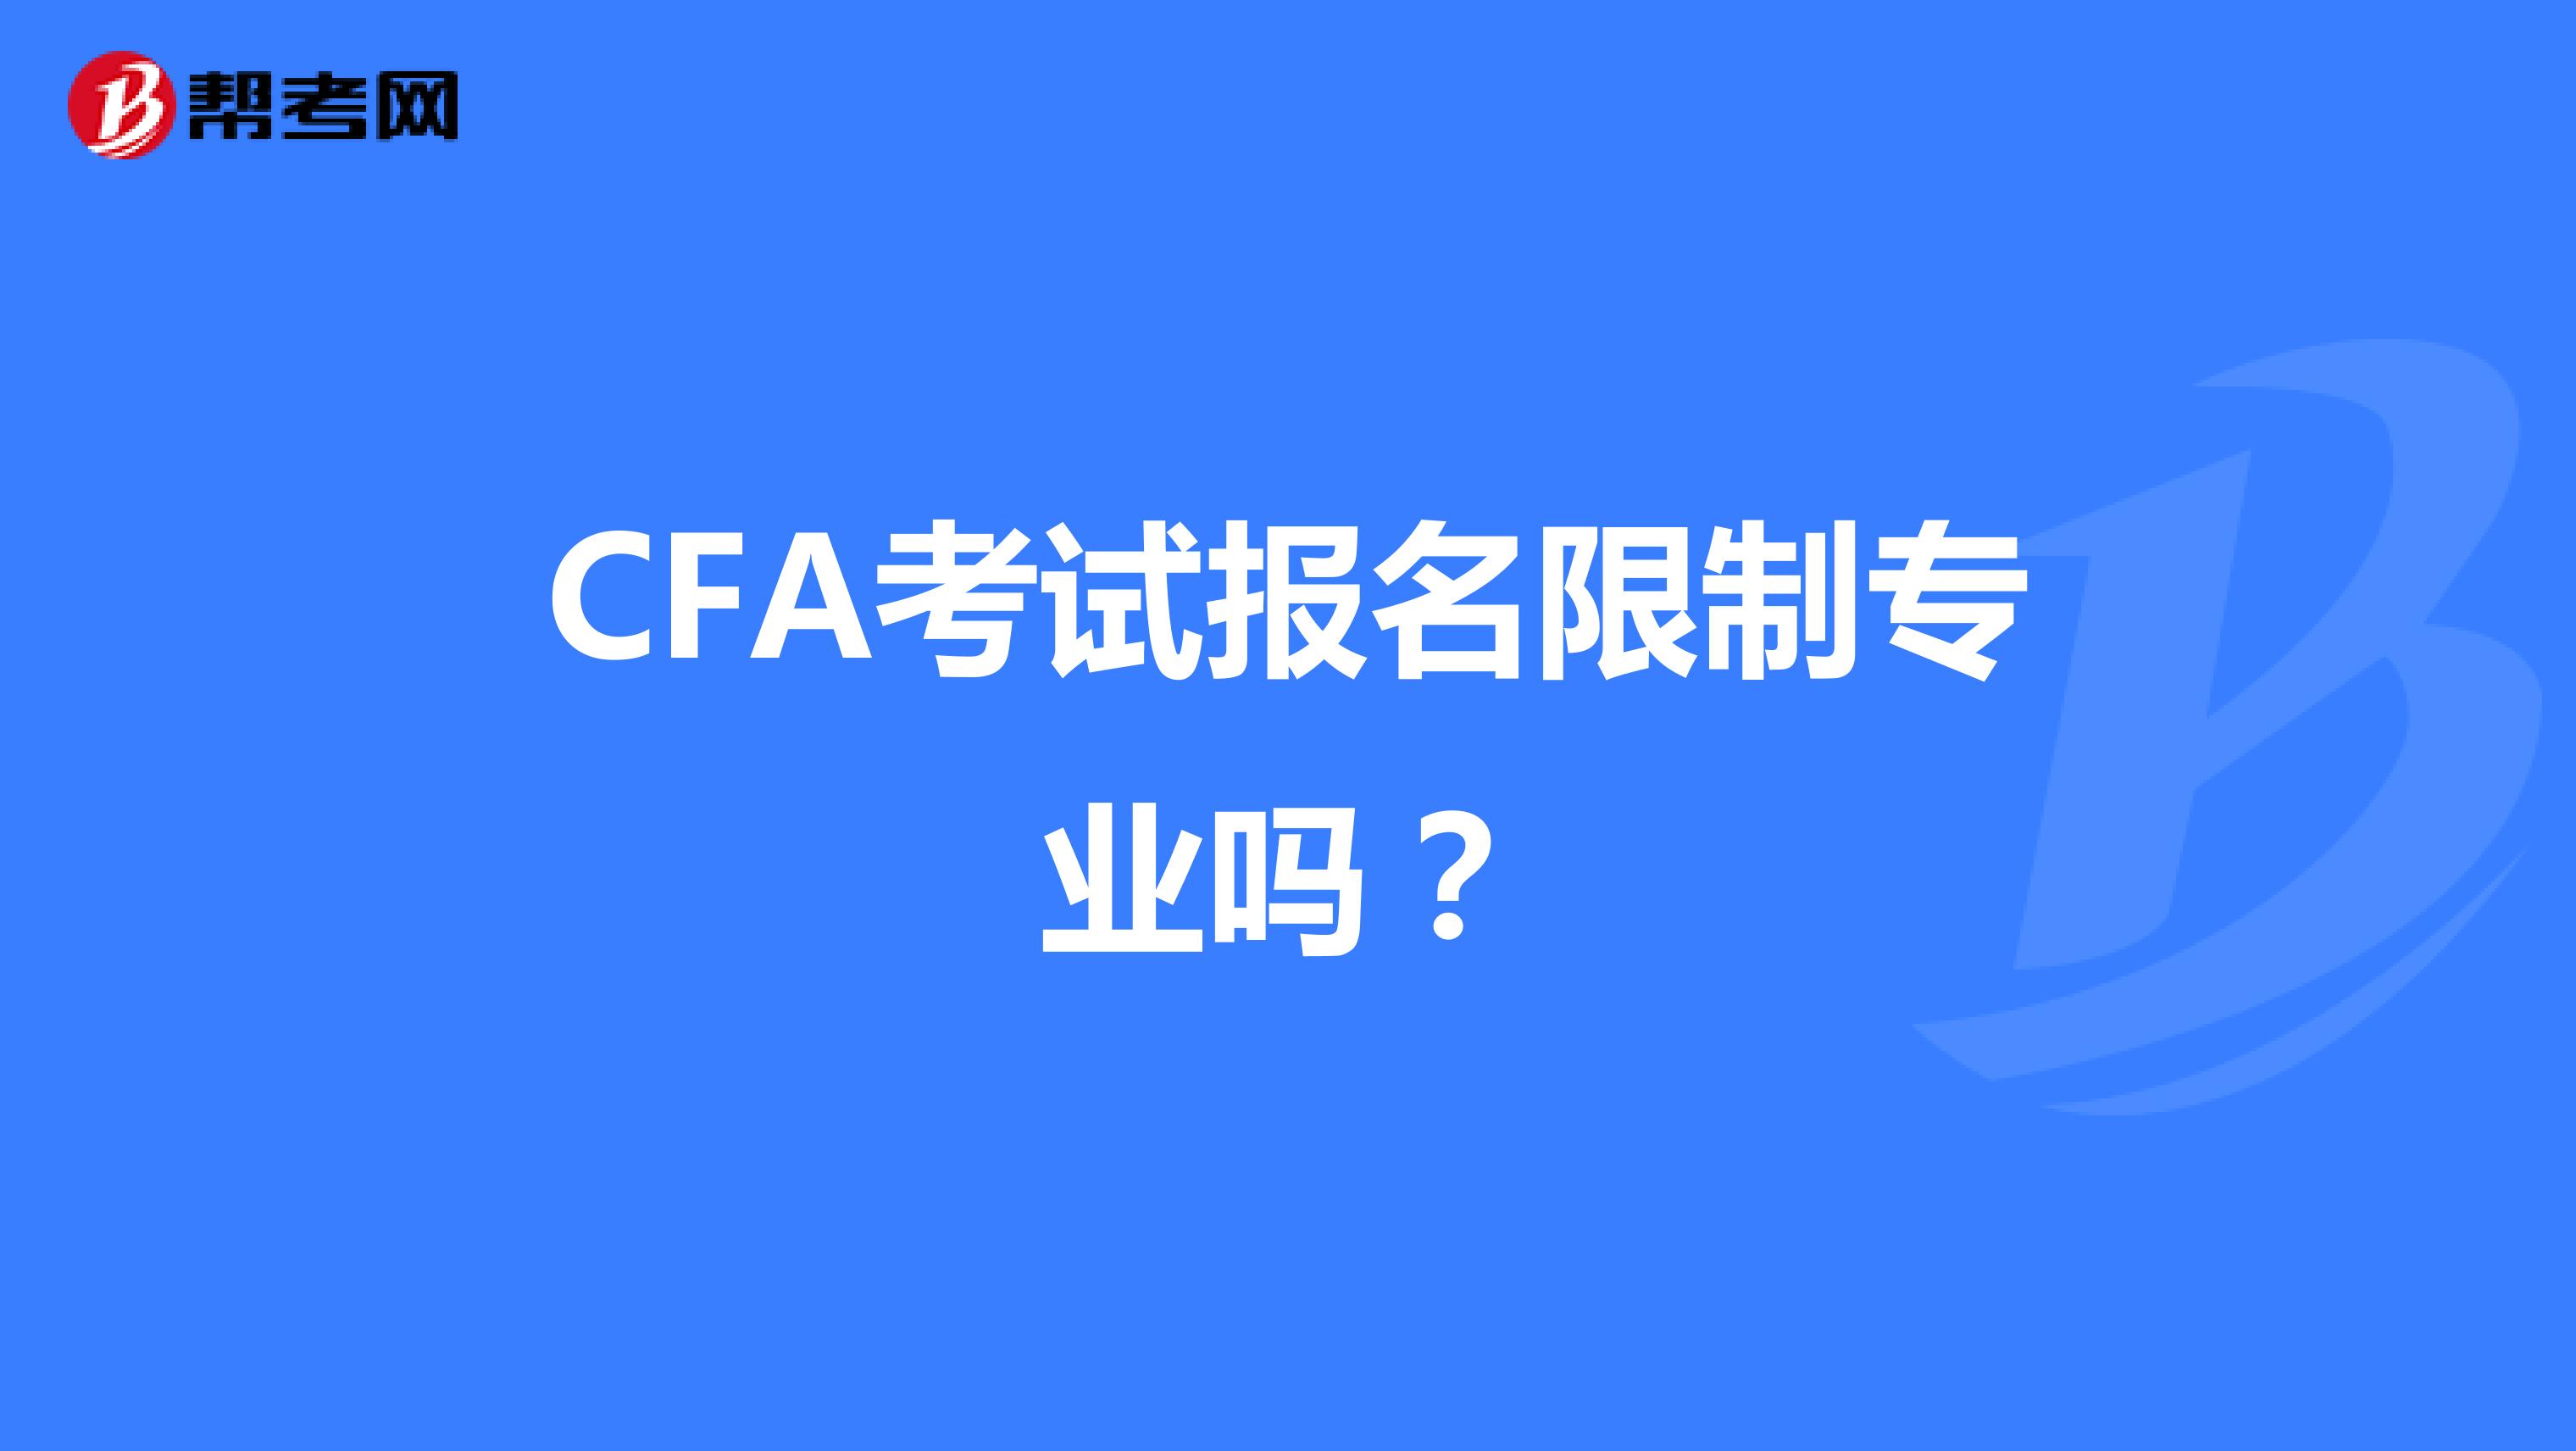 CFA考试报名限制专业吗？